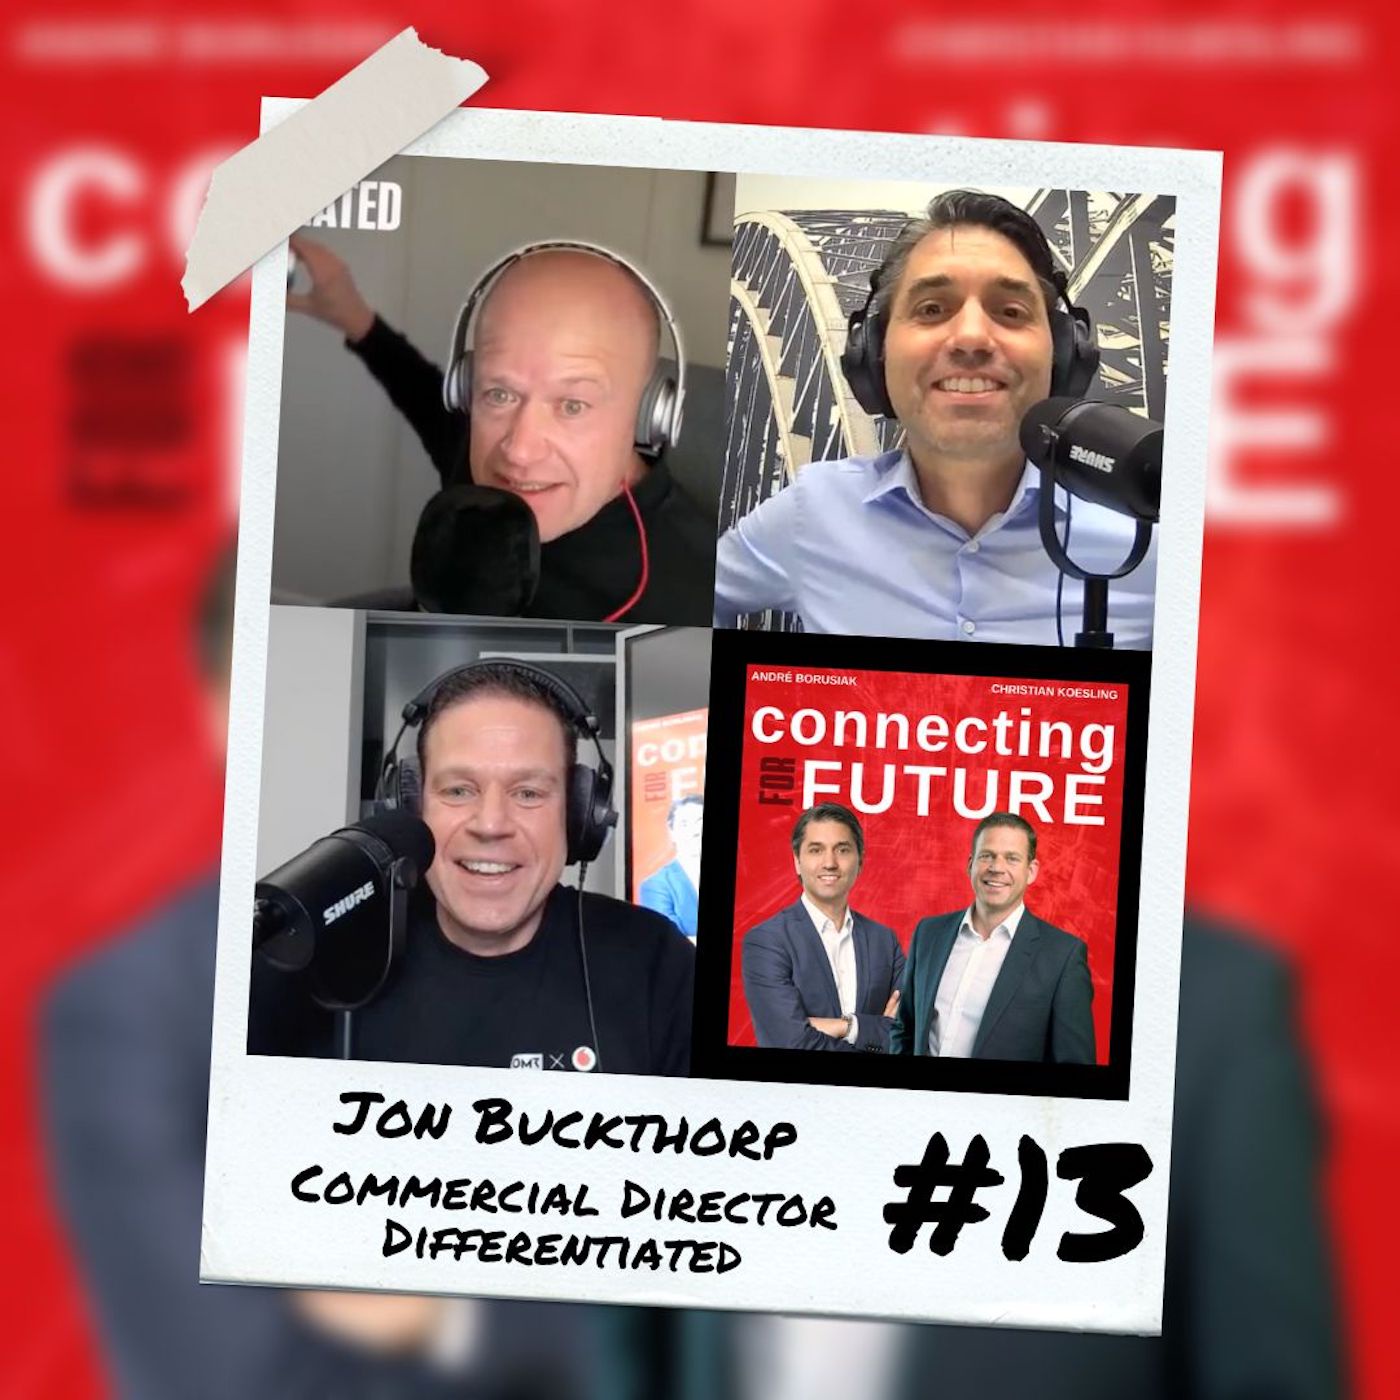 #13 Jon Buckthorp, Commercial Director Differentiated